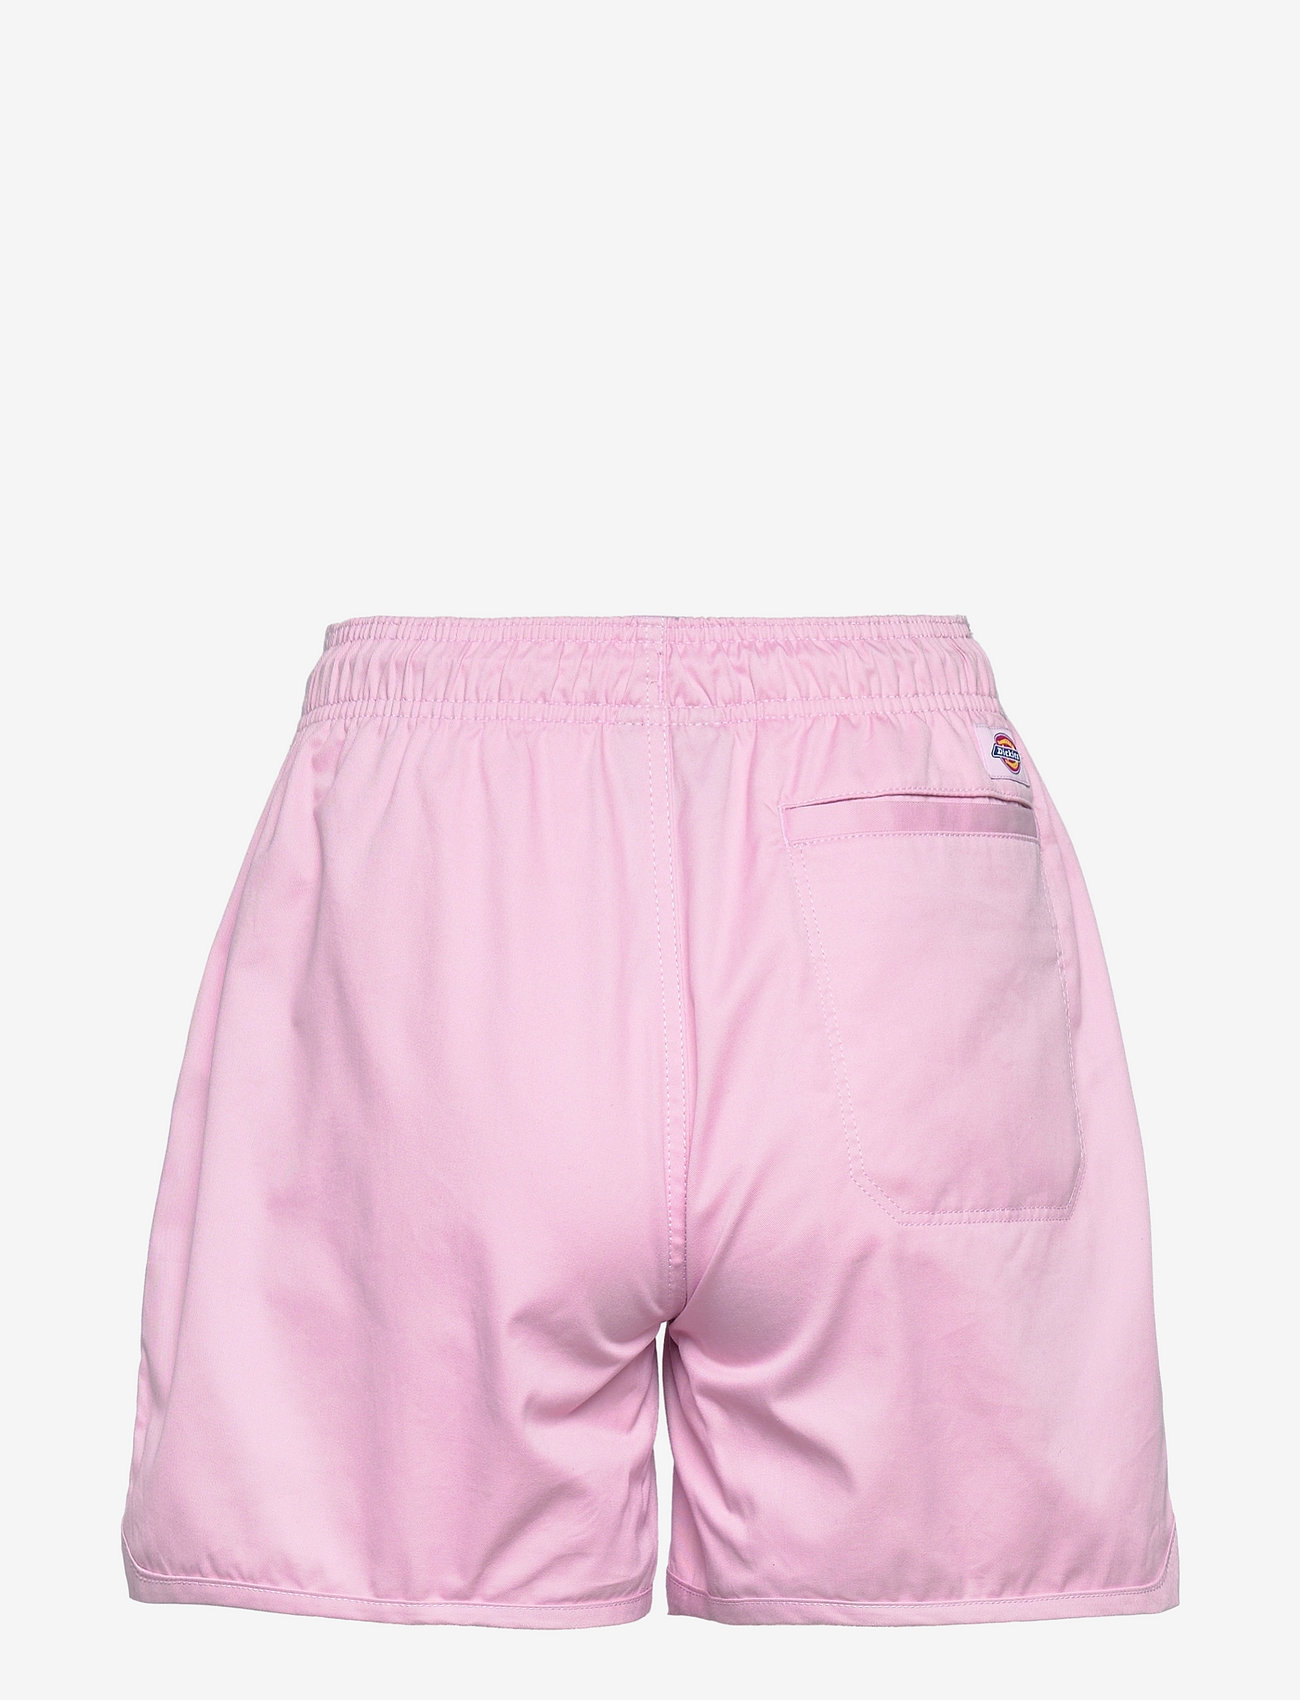 opruiming > pink dickie shorts